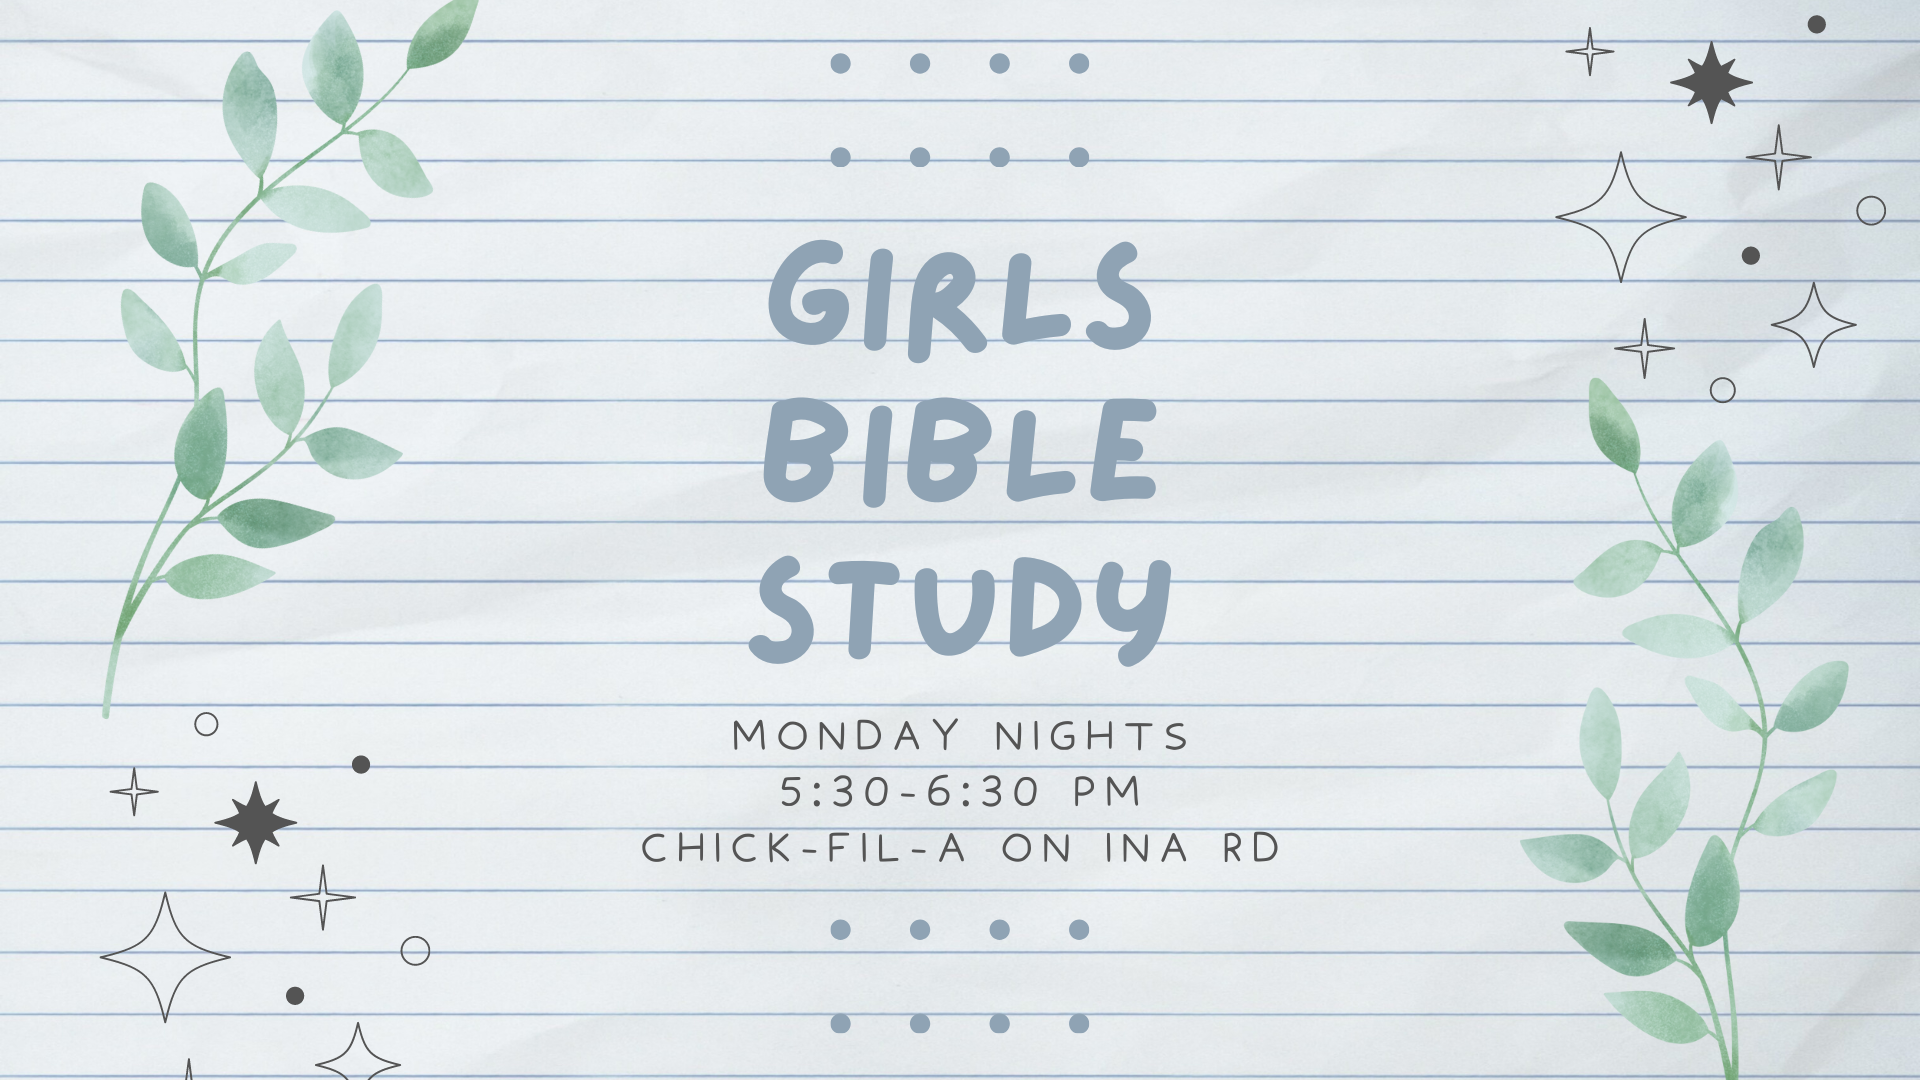 Girls Bible study